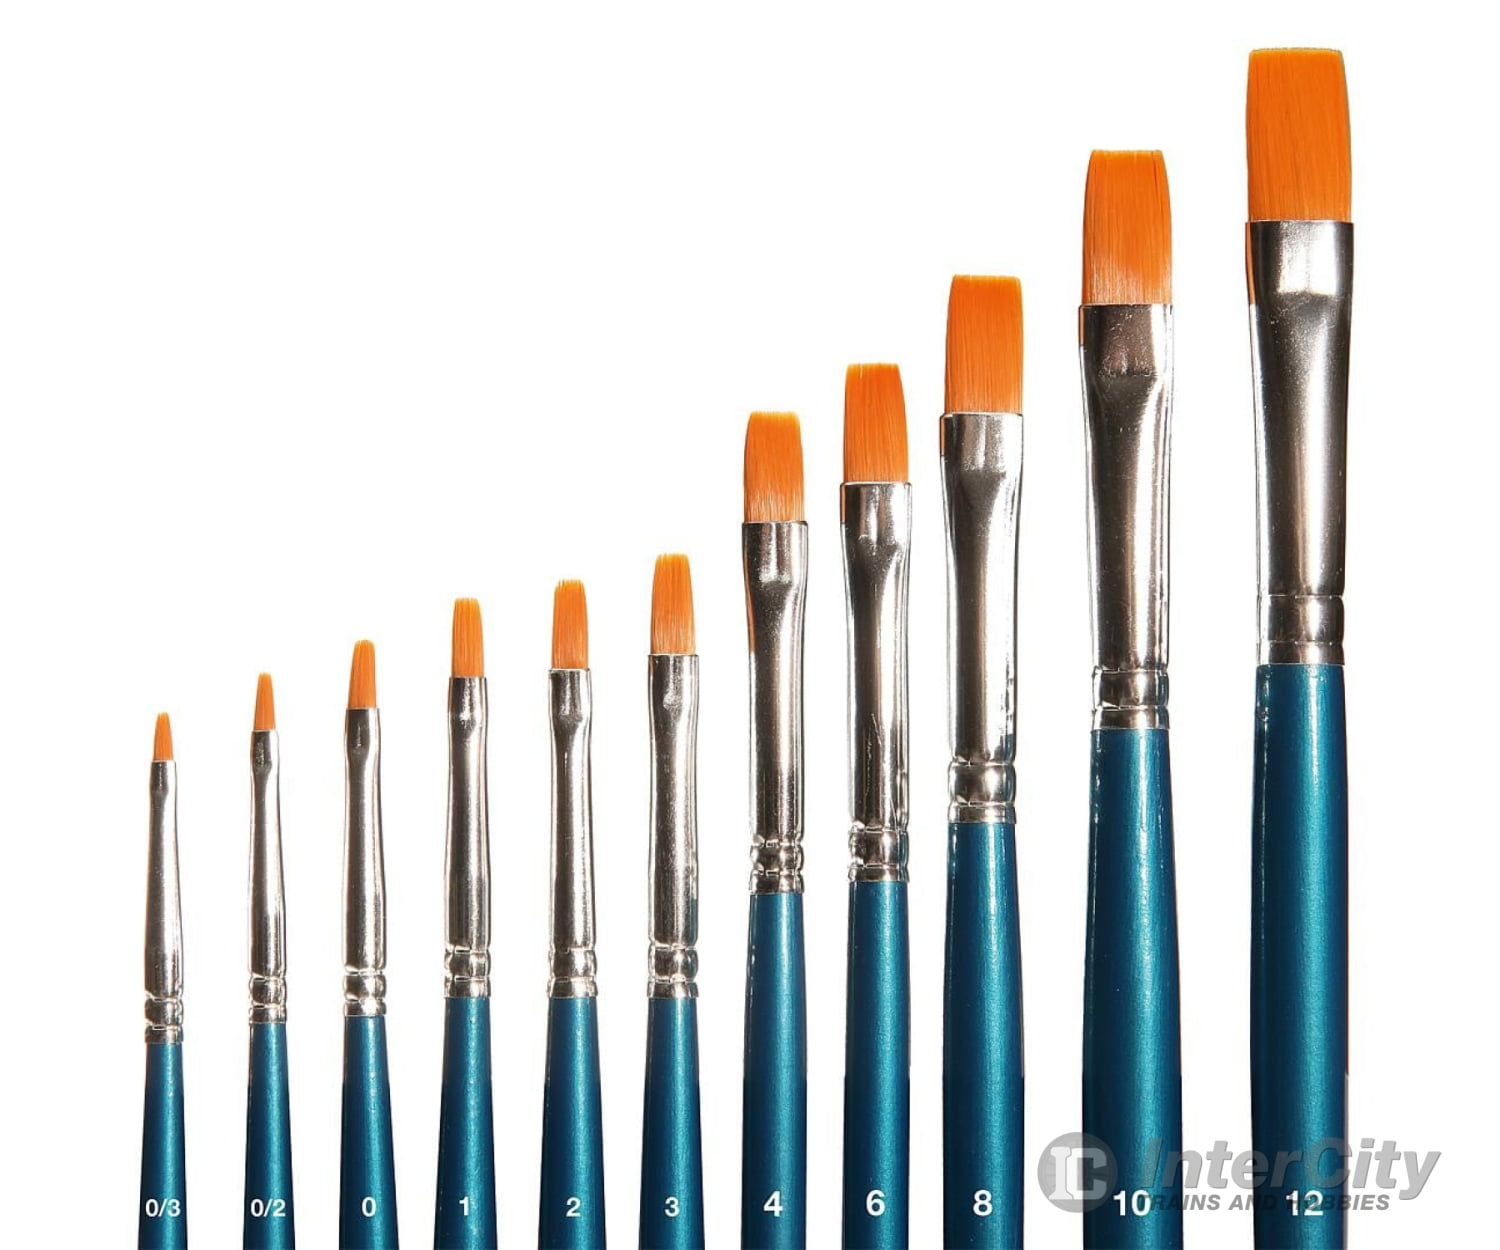 Faller 172123 Ho Tt N Z Flat Brush Synthetic Size 1 Tools